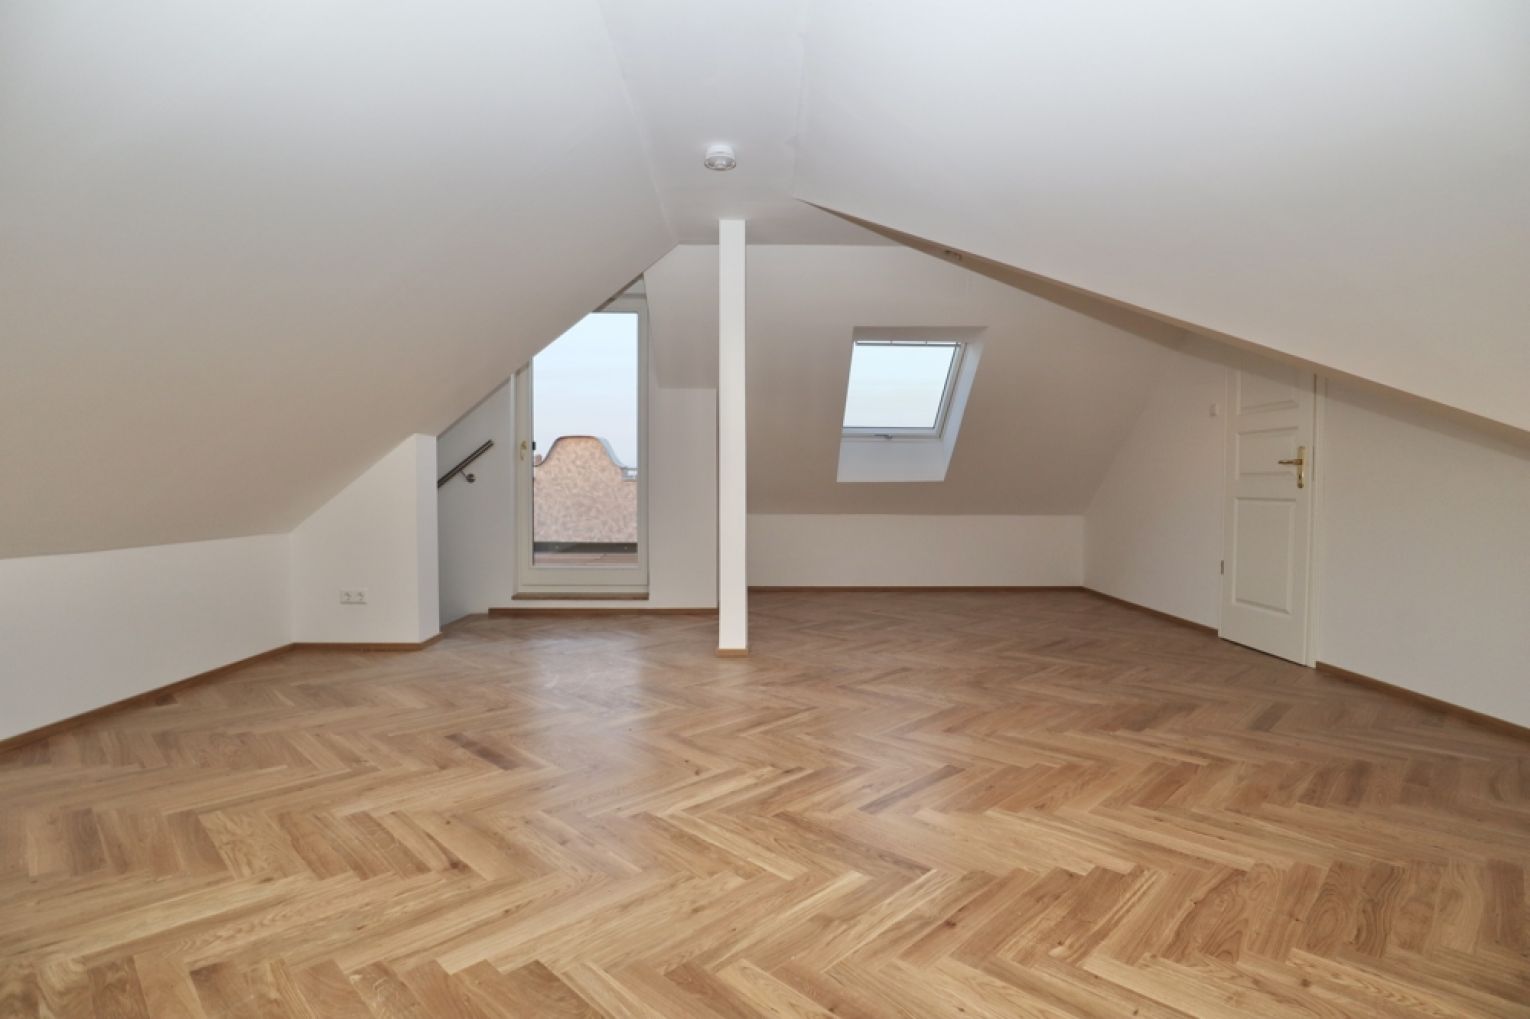 Terrasse • 5-Zimmer • Maisonette • ERSTBEZUG • Chemnitz • Fußbodenheizung • Sonnenberg • jetzt mieten